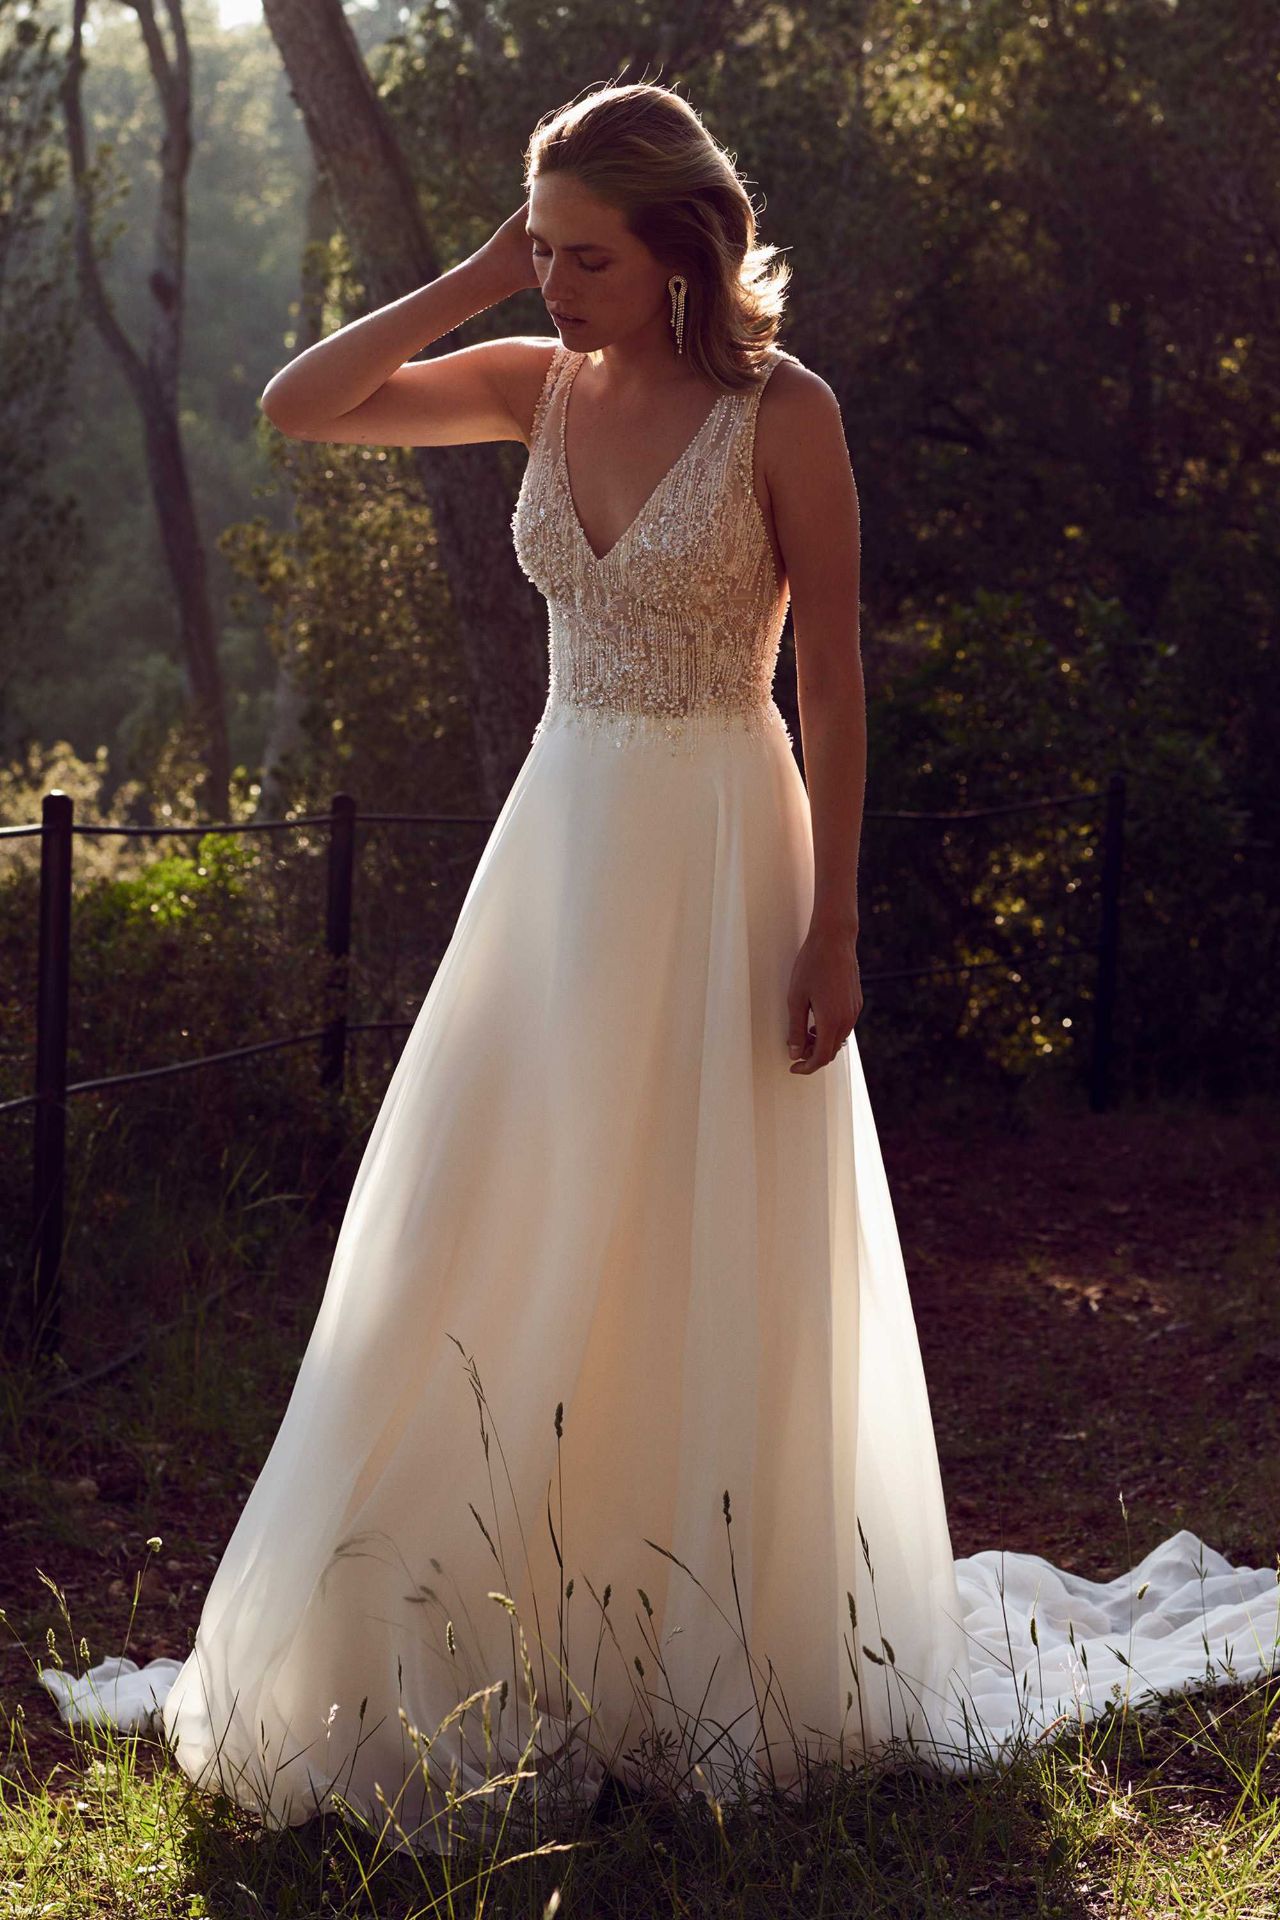 1 x Justin Alexander Designer Wedding Dress With Sheer Beaded Bodice - UK Size 10 - RRP £1,390 - Image 6 of 11